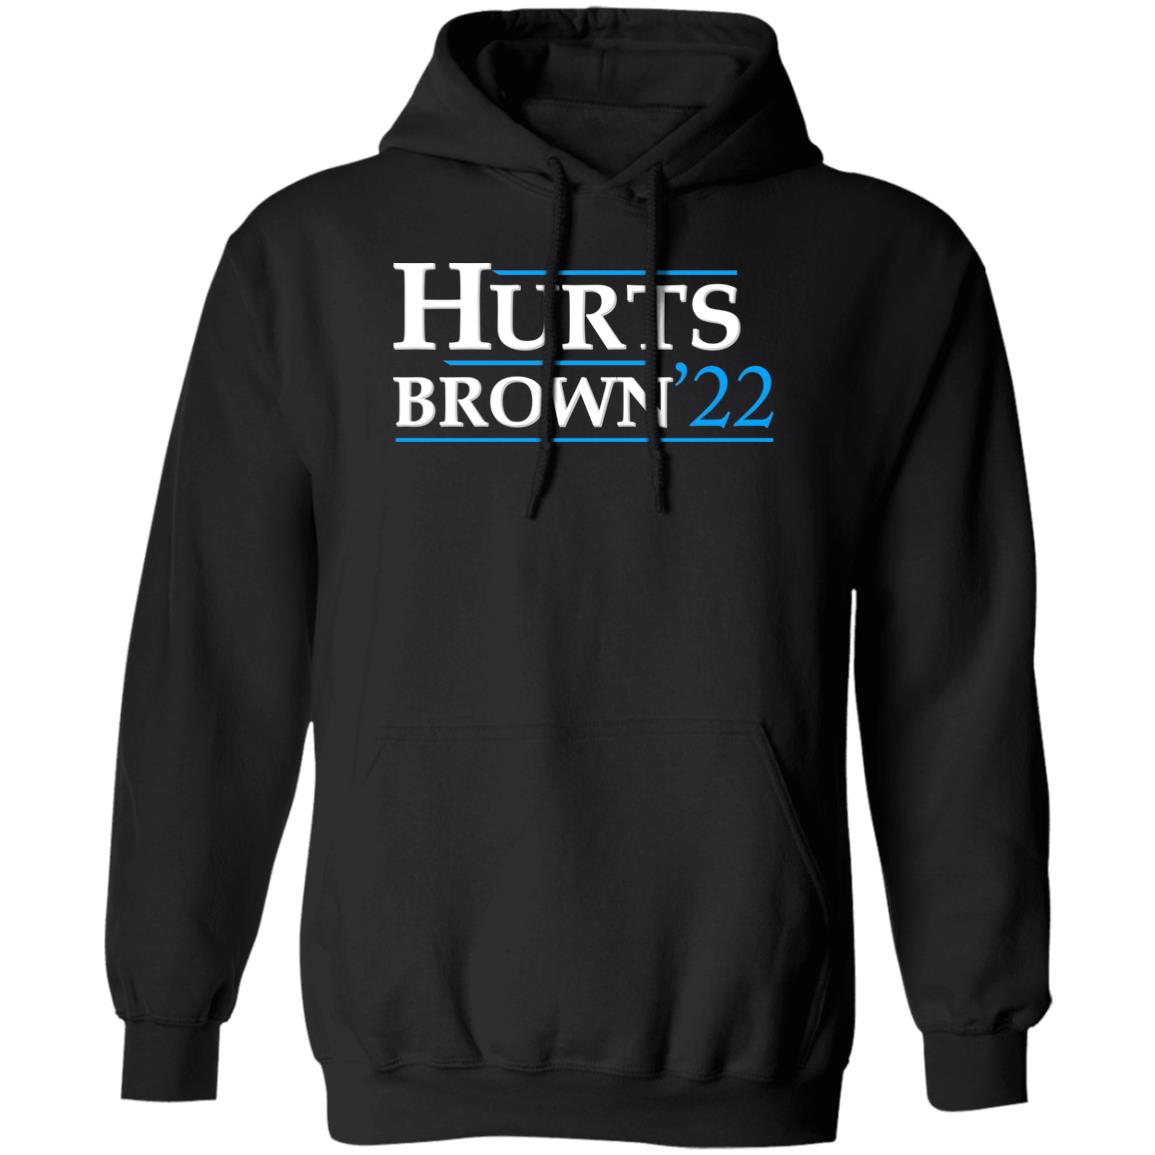 Hurts Brown 22 Shirt 1